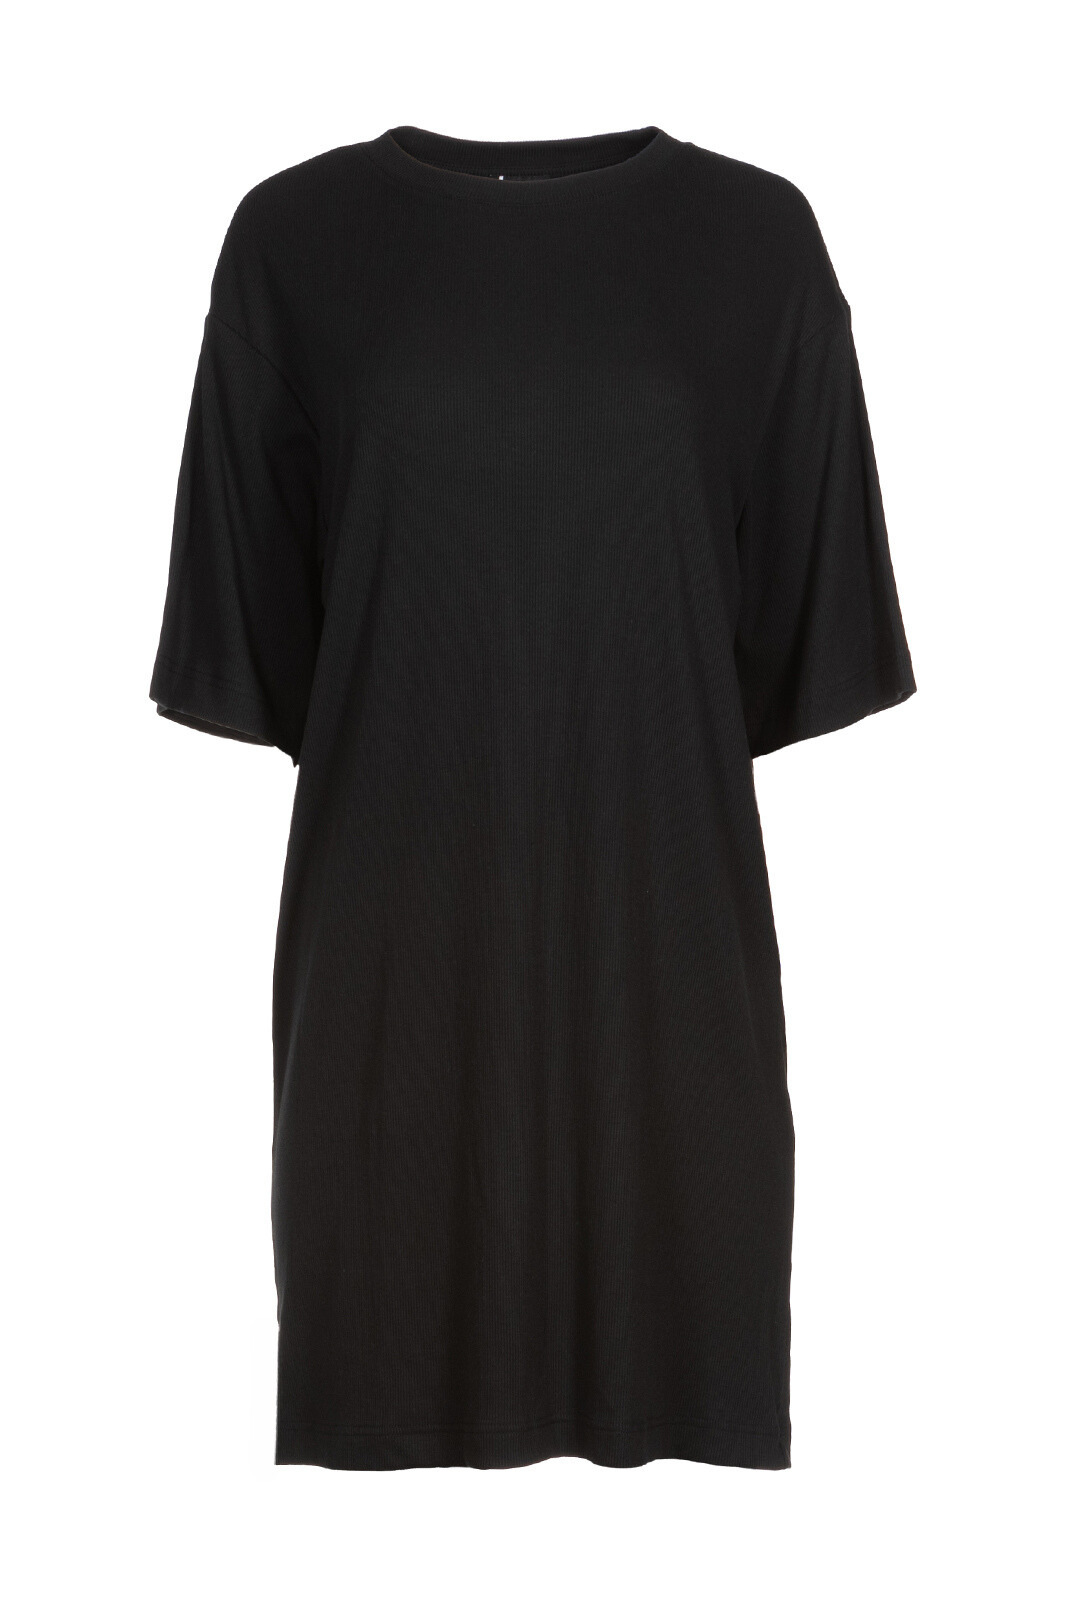 Robe t-shirt noire ample | Kara